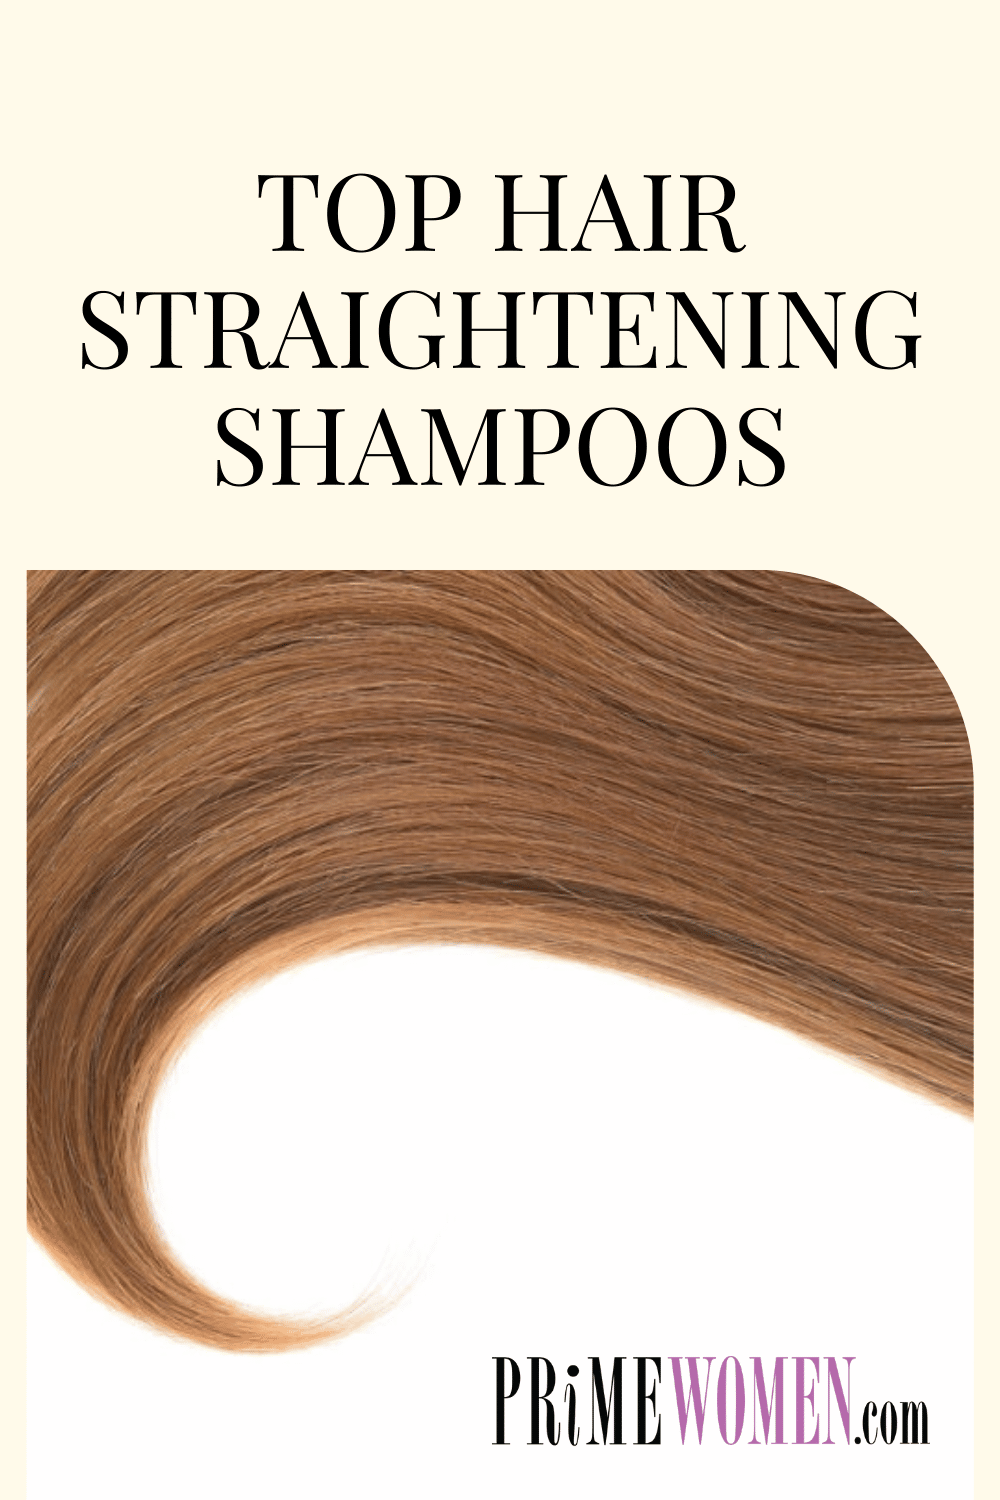 Top Hair Straightening Shampoos